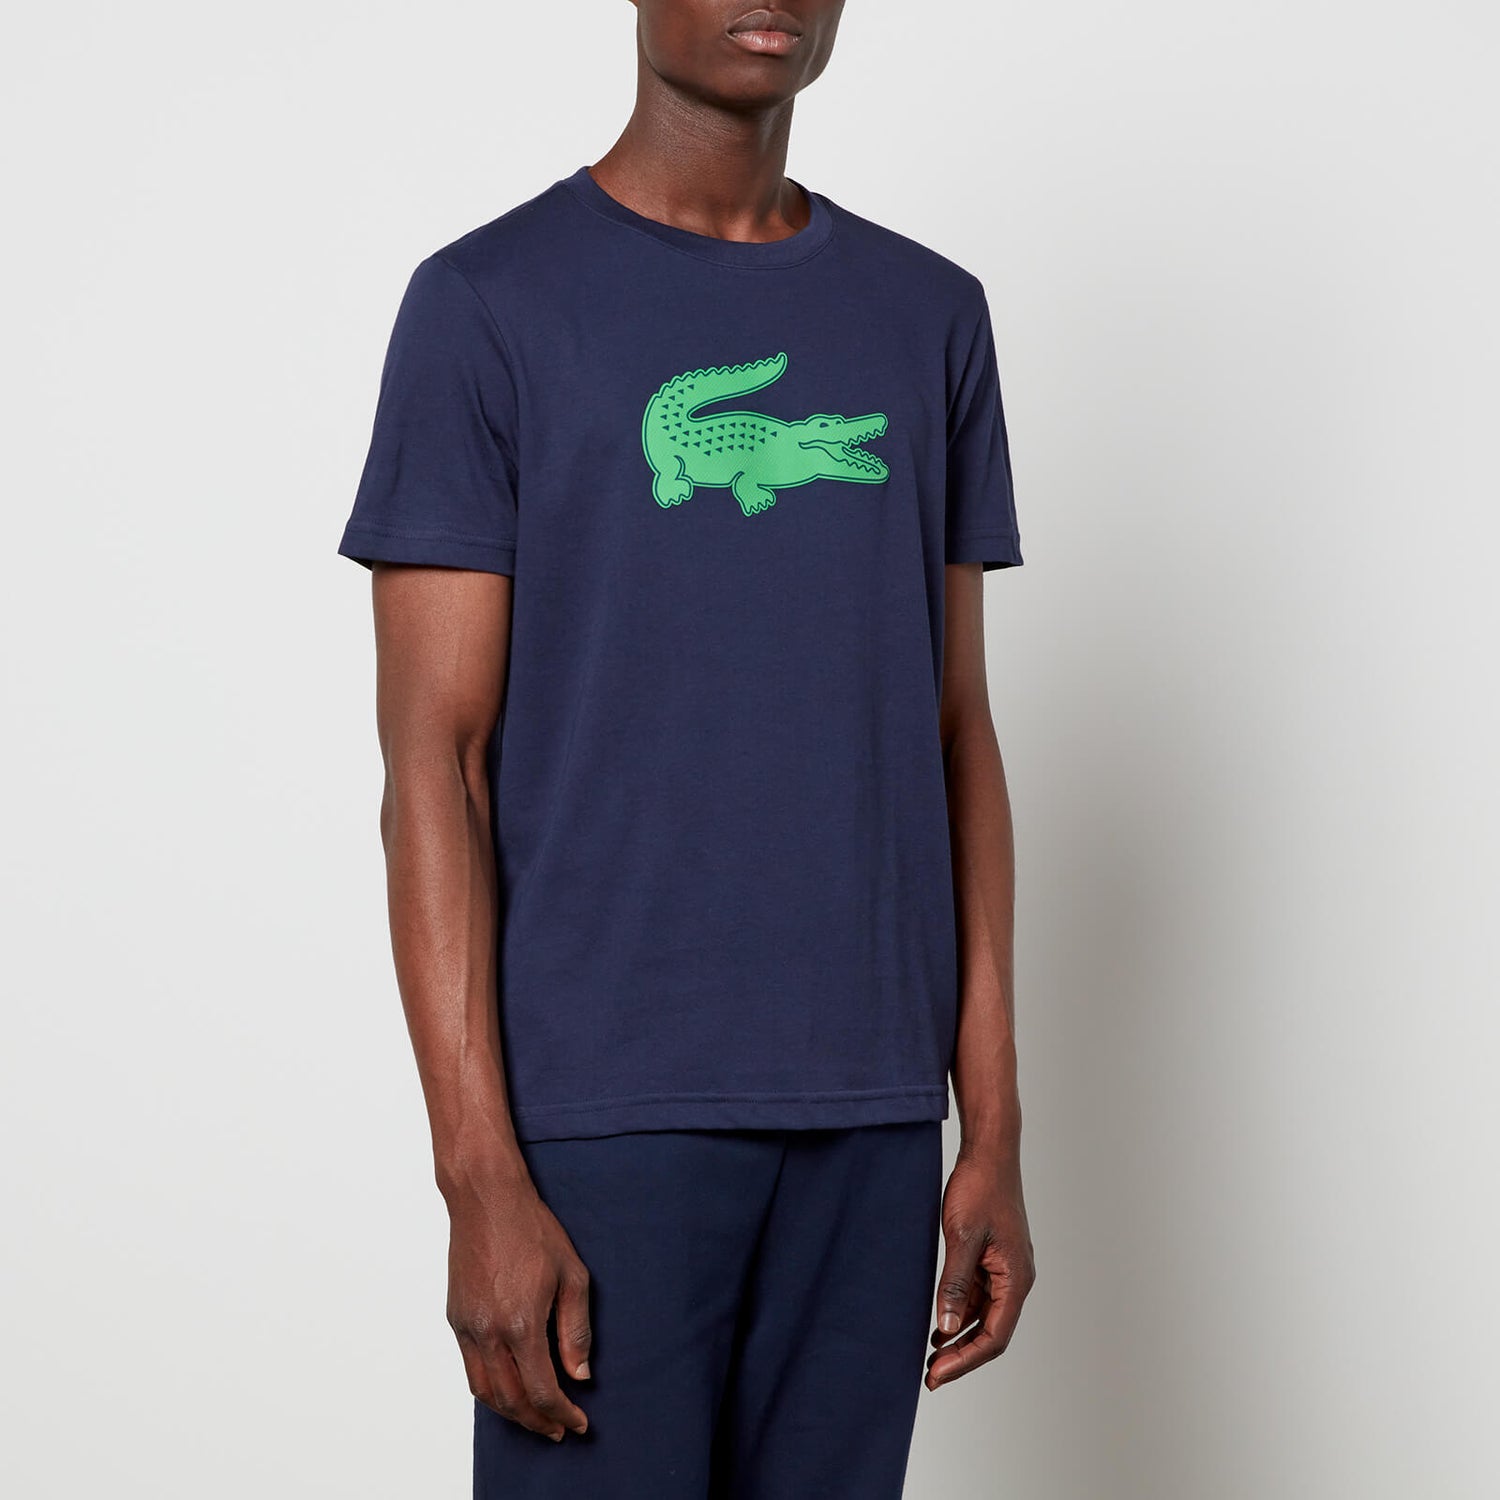 Lacoste Men's Large Croc T-Shirt - Navy Blue/Clover Green | TheHut.com